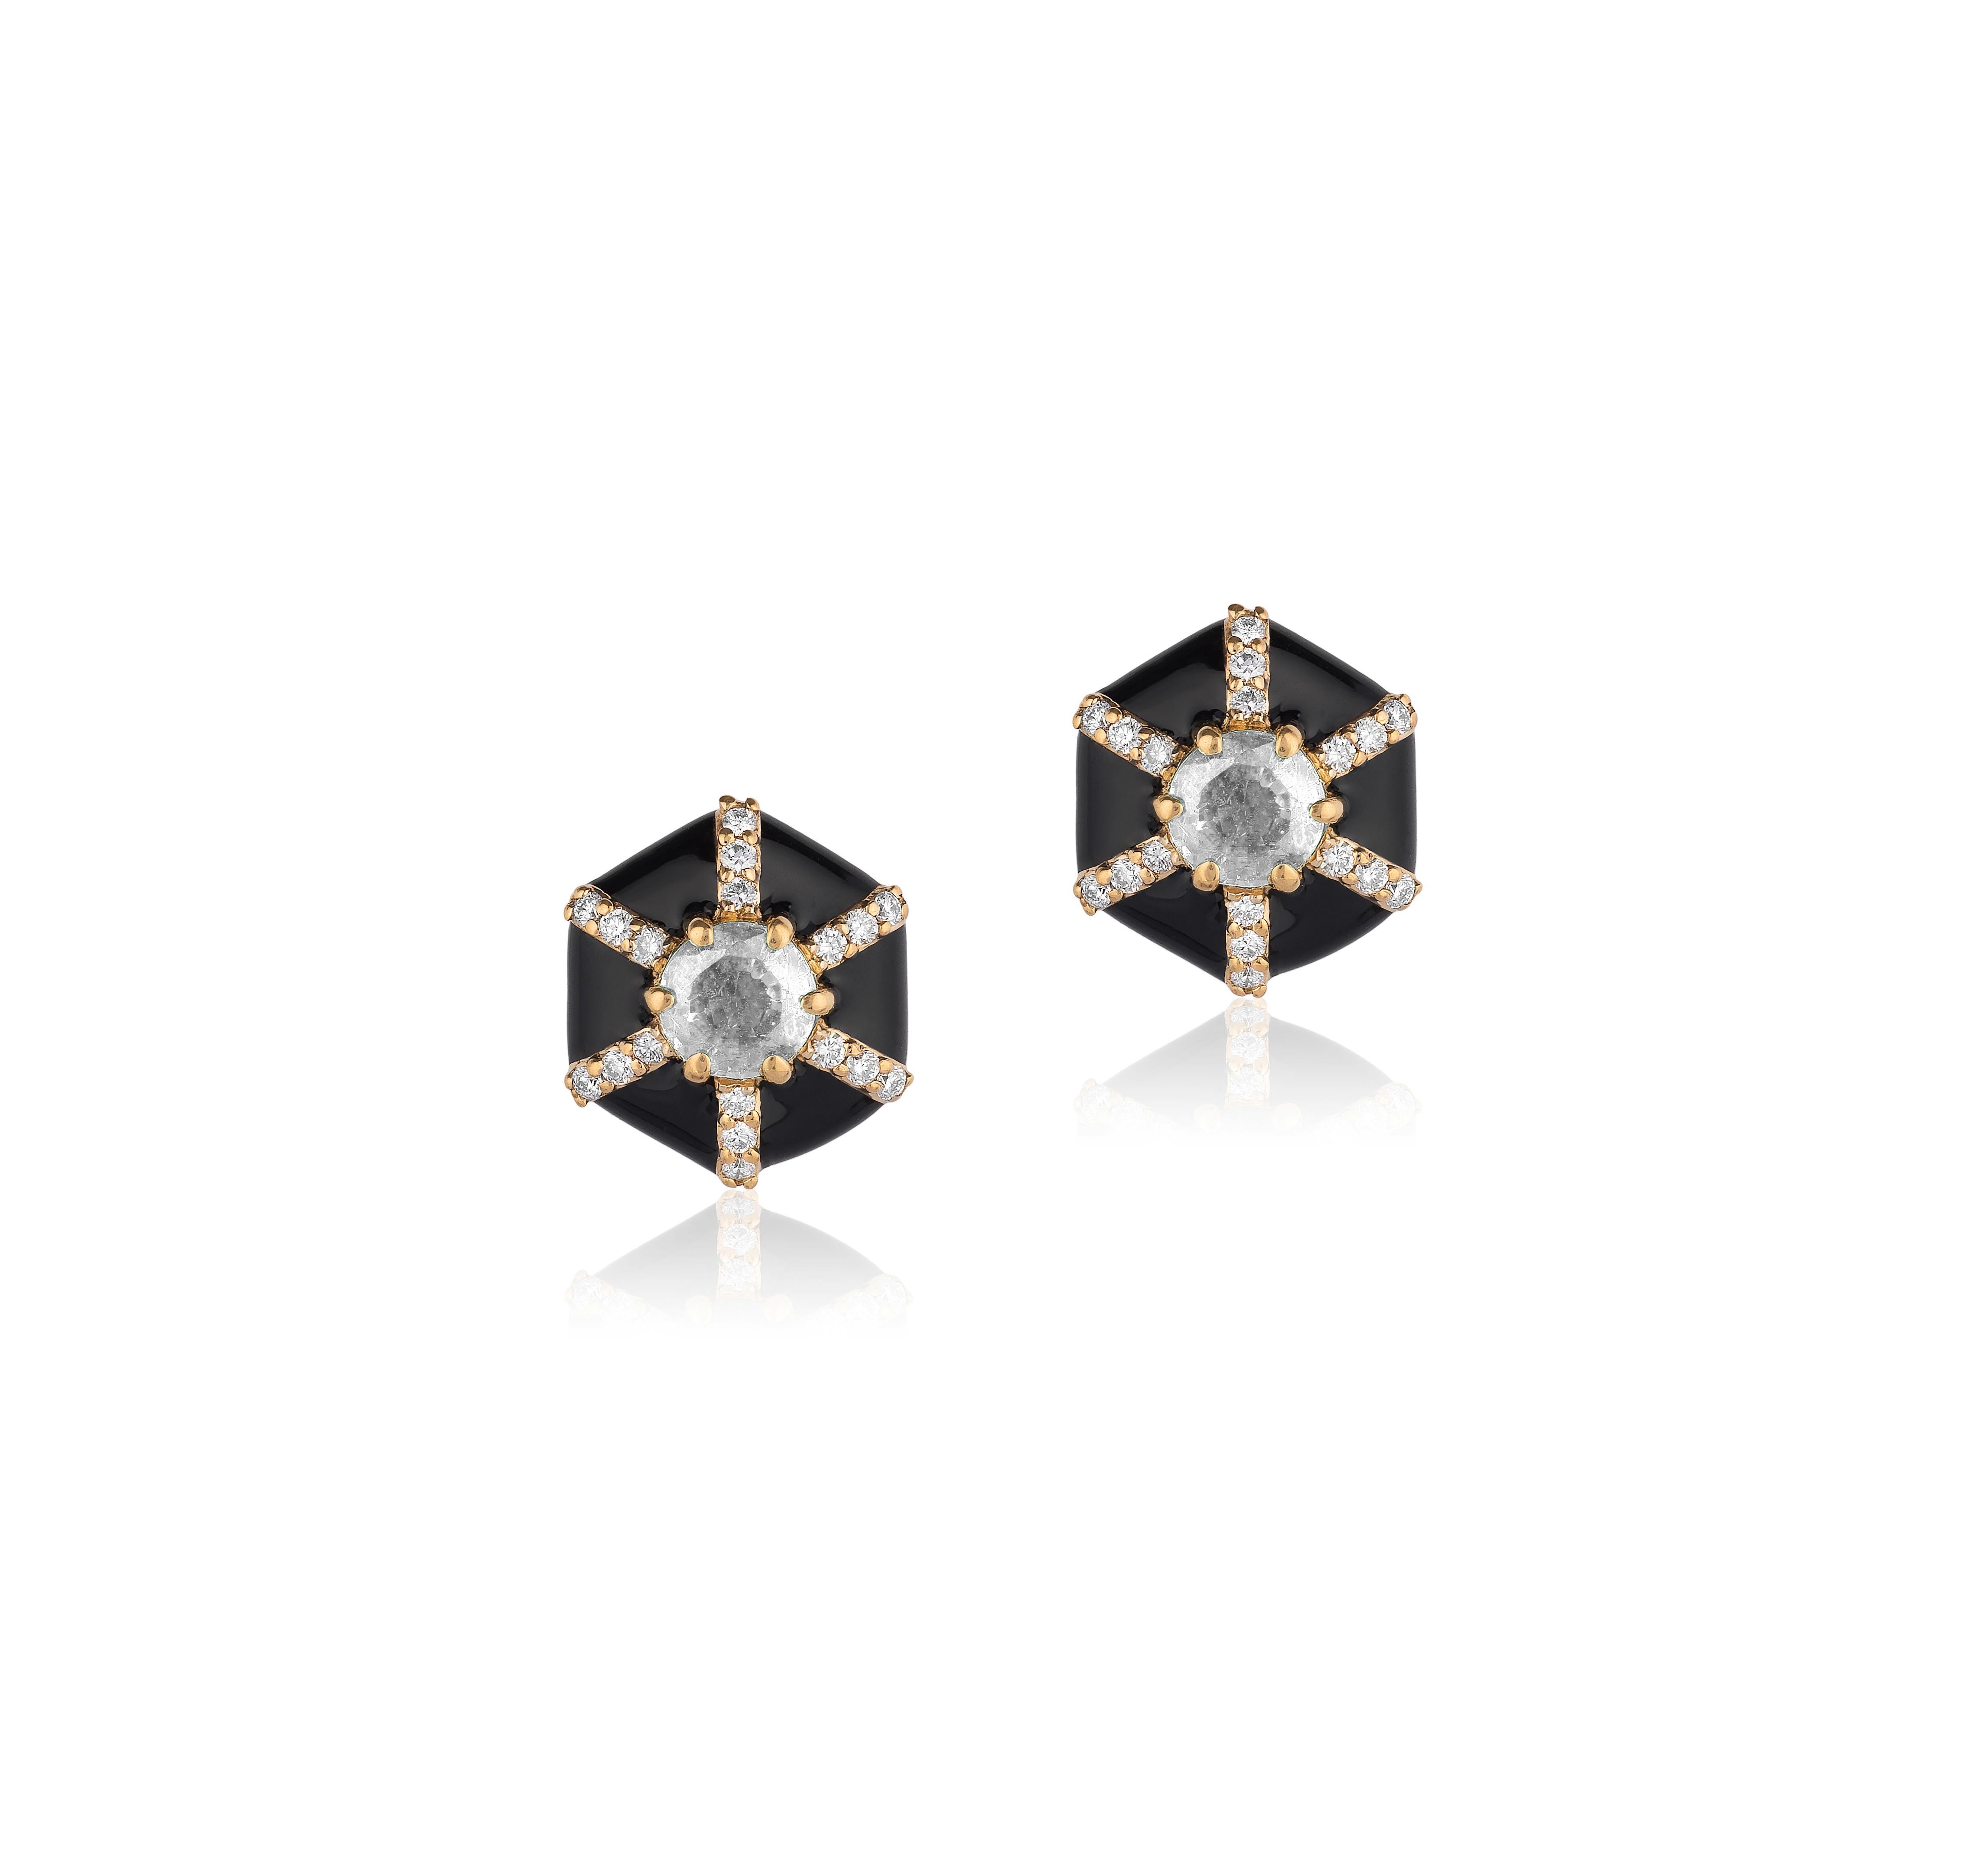 Queen' Hexagon Black Enamel Stud Earrings with Diamonds in 18K Yellow Gold.
Stone Size: 4 mm
Diamonds: G-H / VS; Approx. Wt: 0.63 Carats